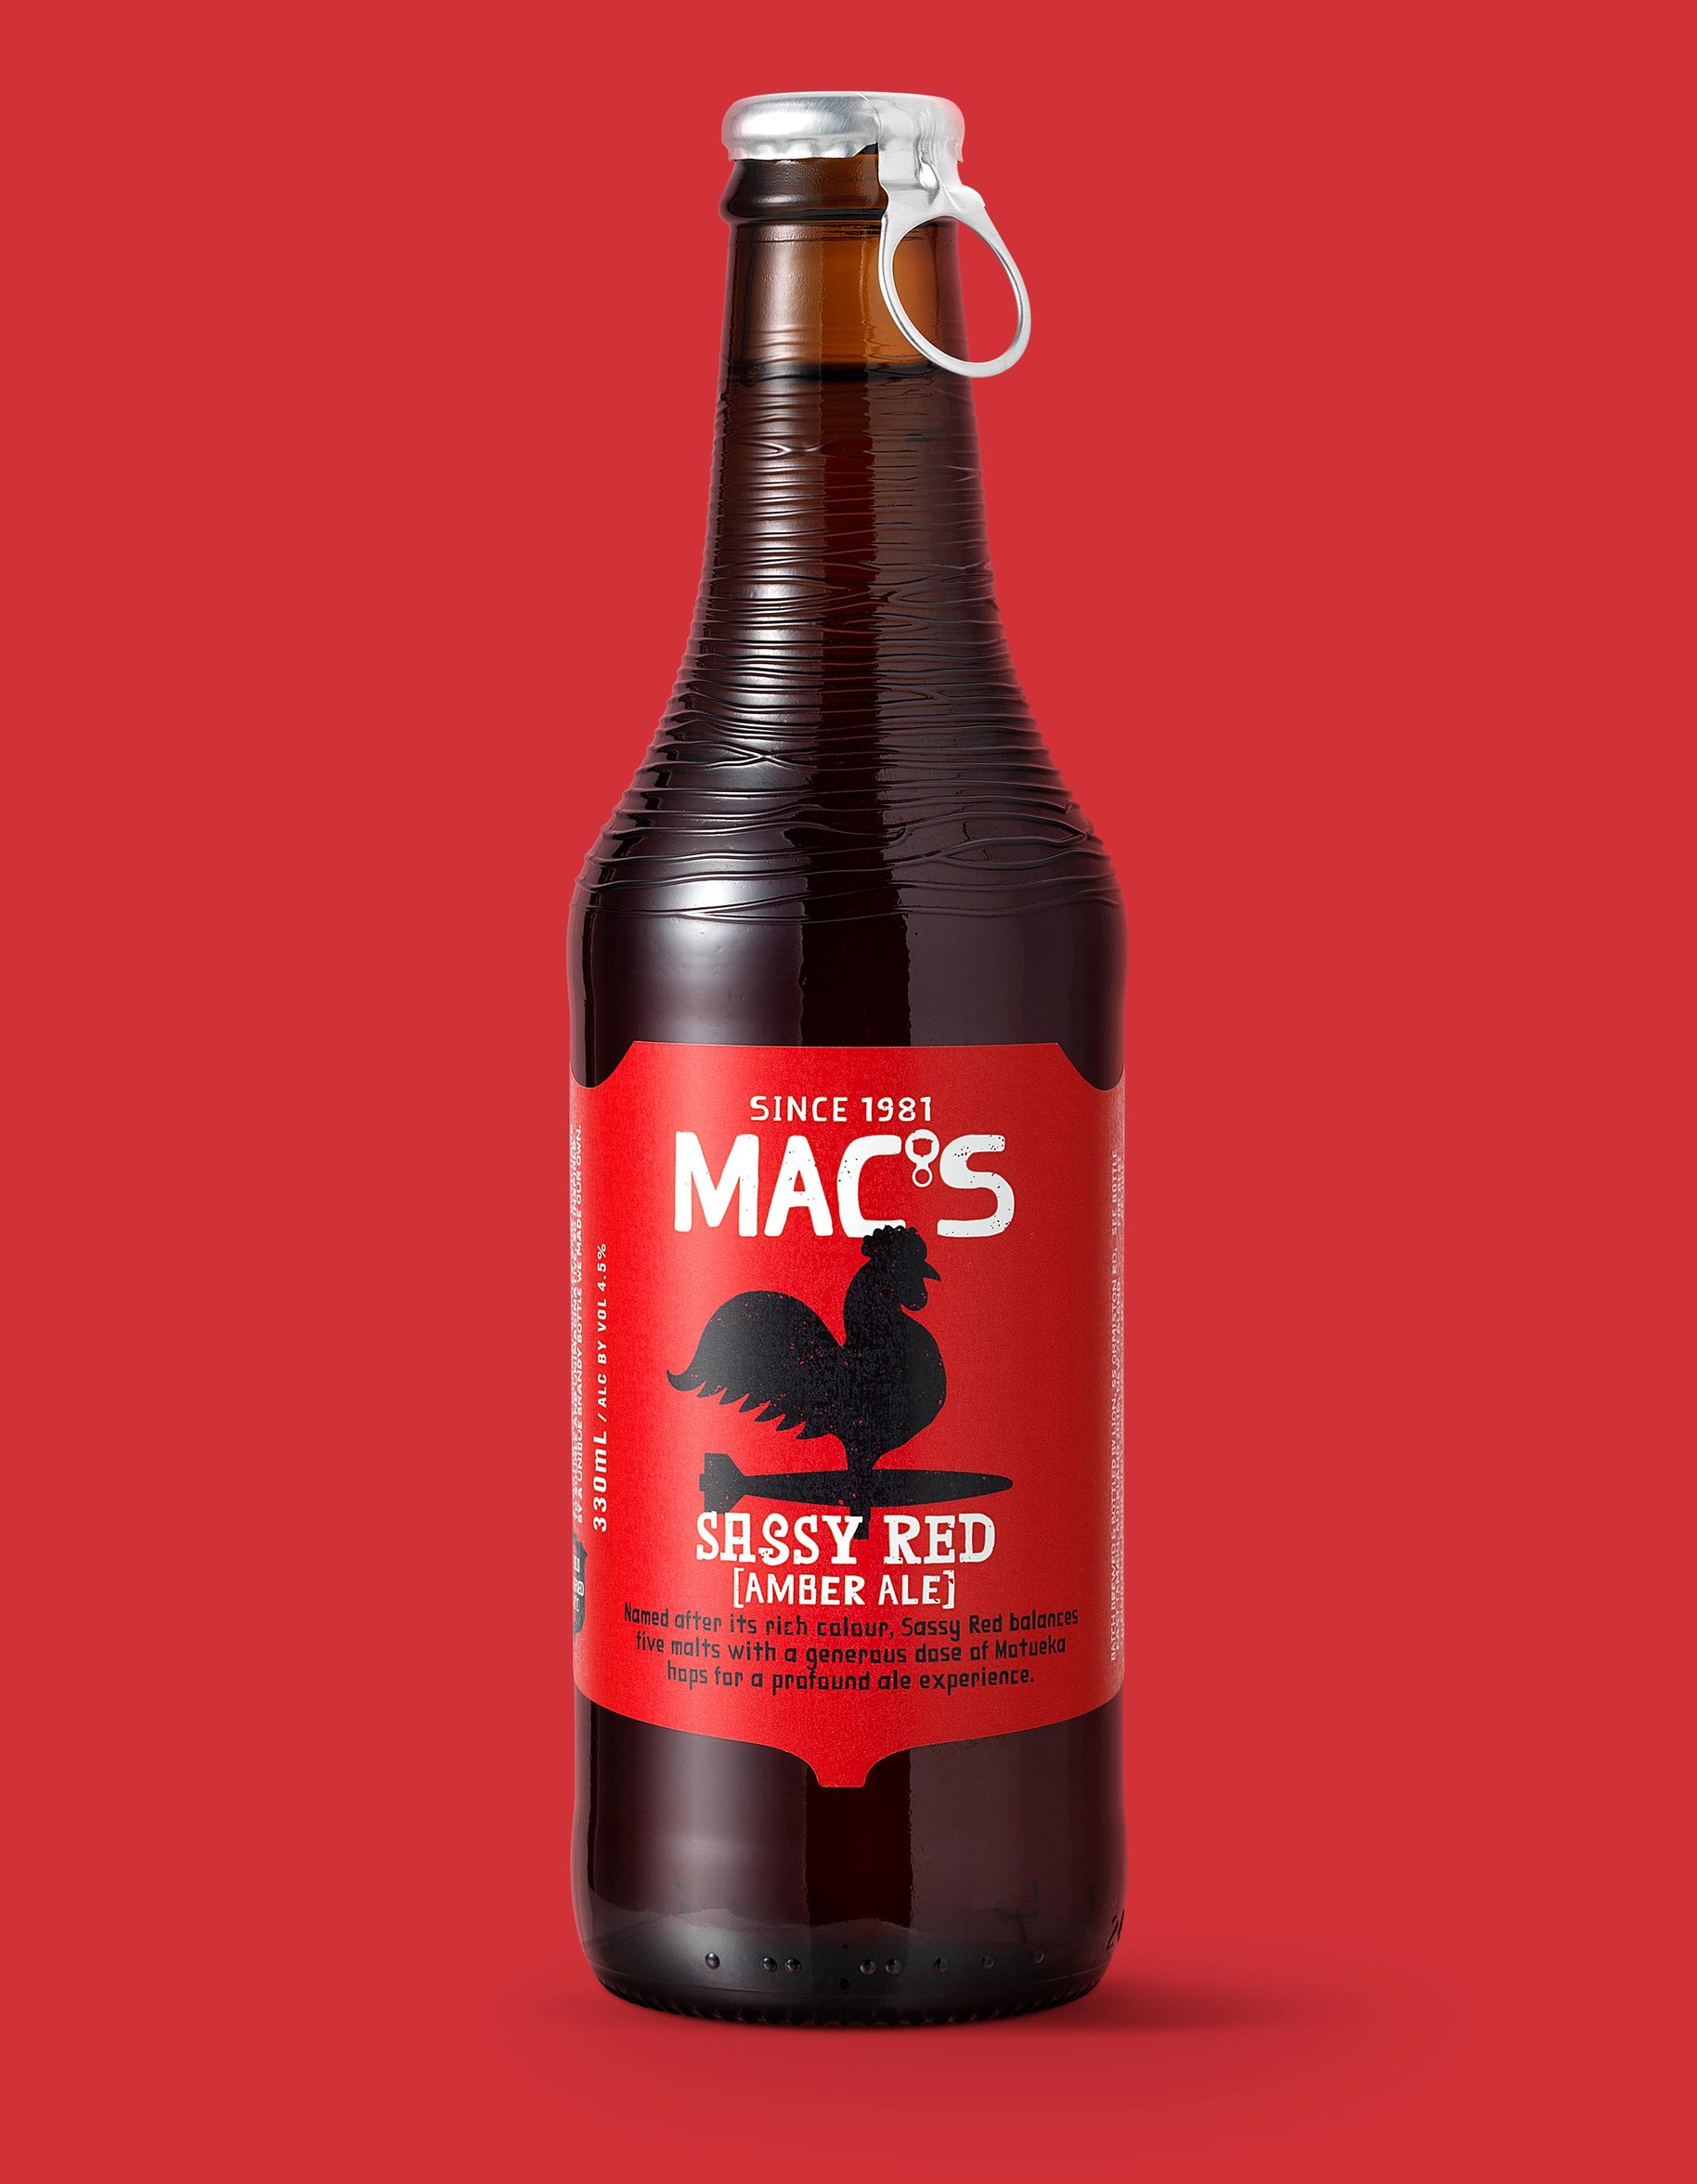 Macs Beer Sassy Red amber ale packaging